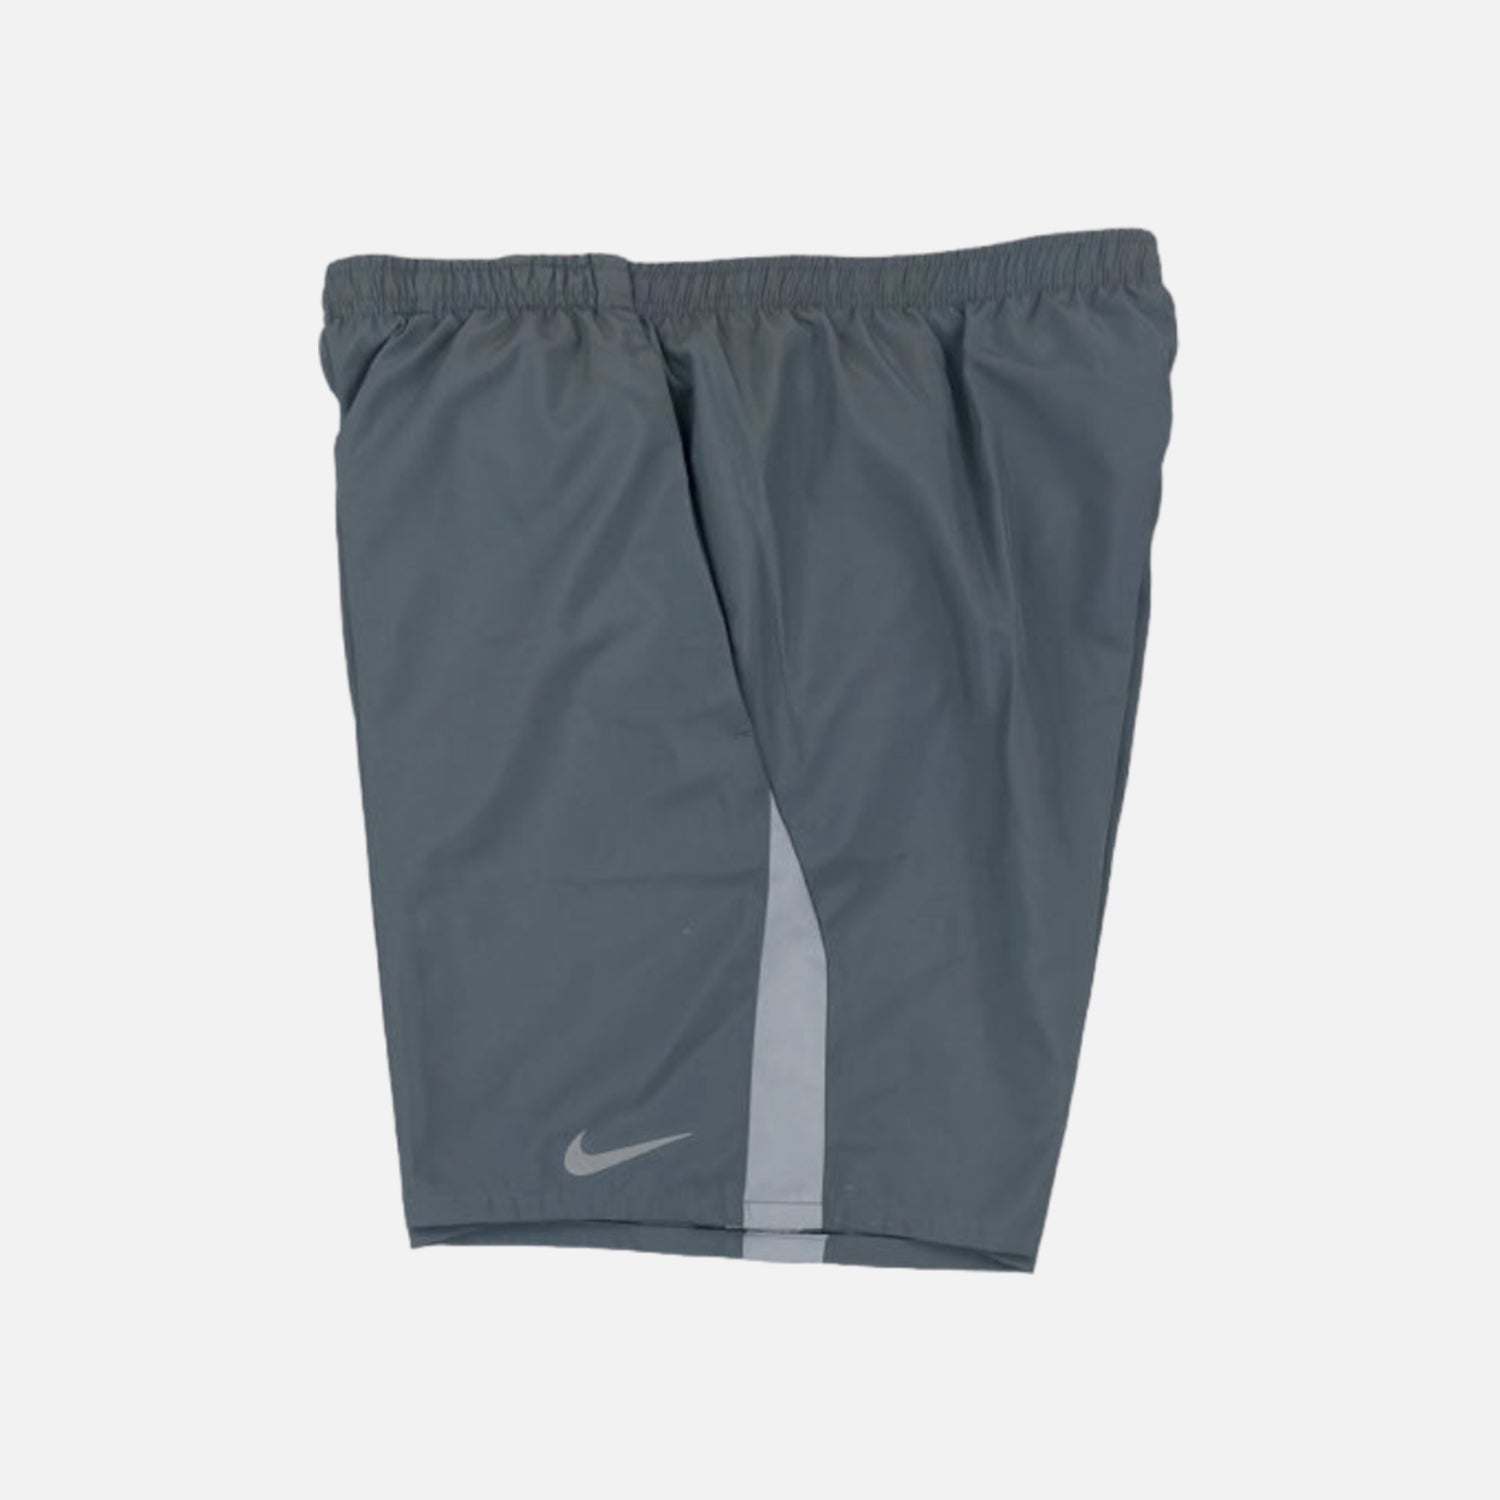 Nike Flex Stride Running Shorts - Grey /Reflective